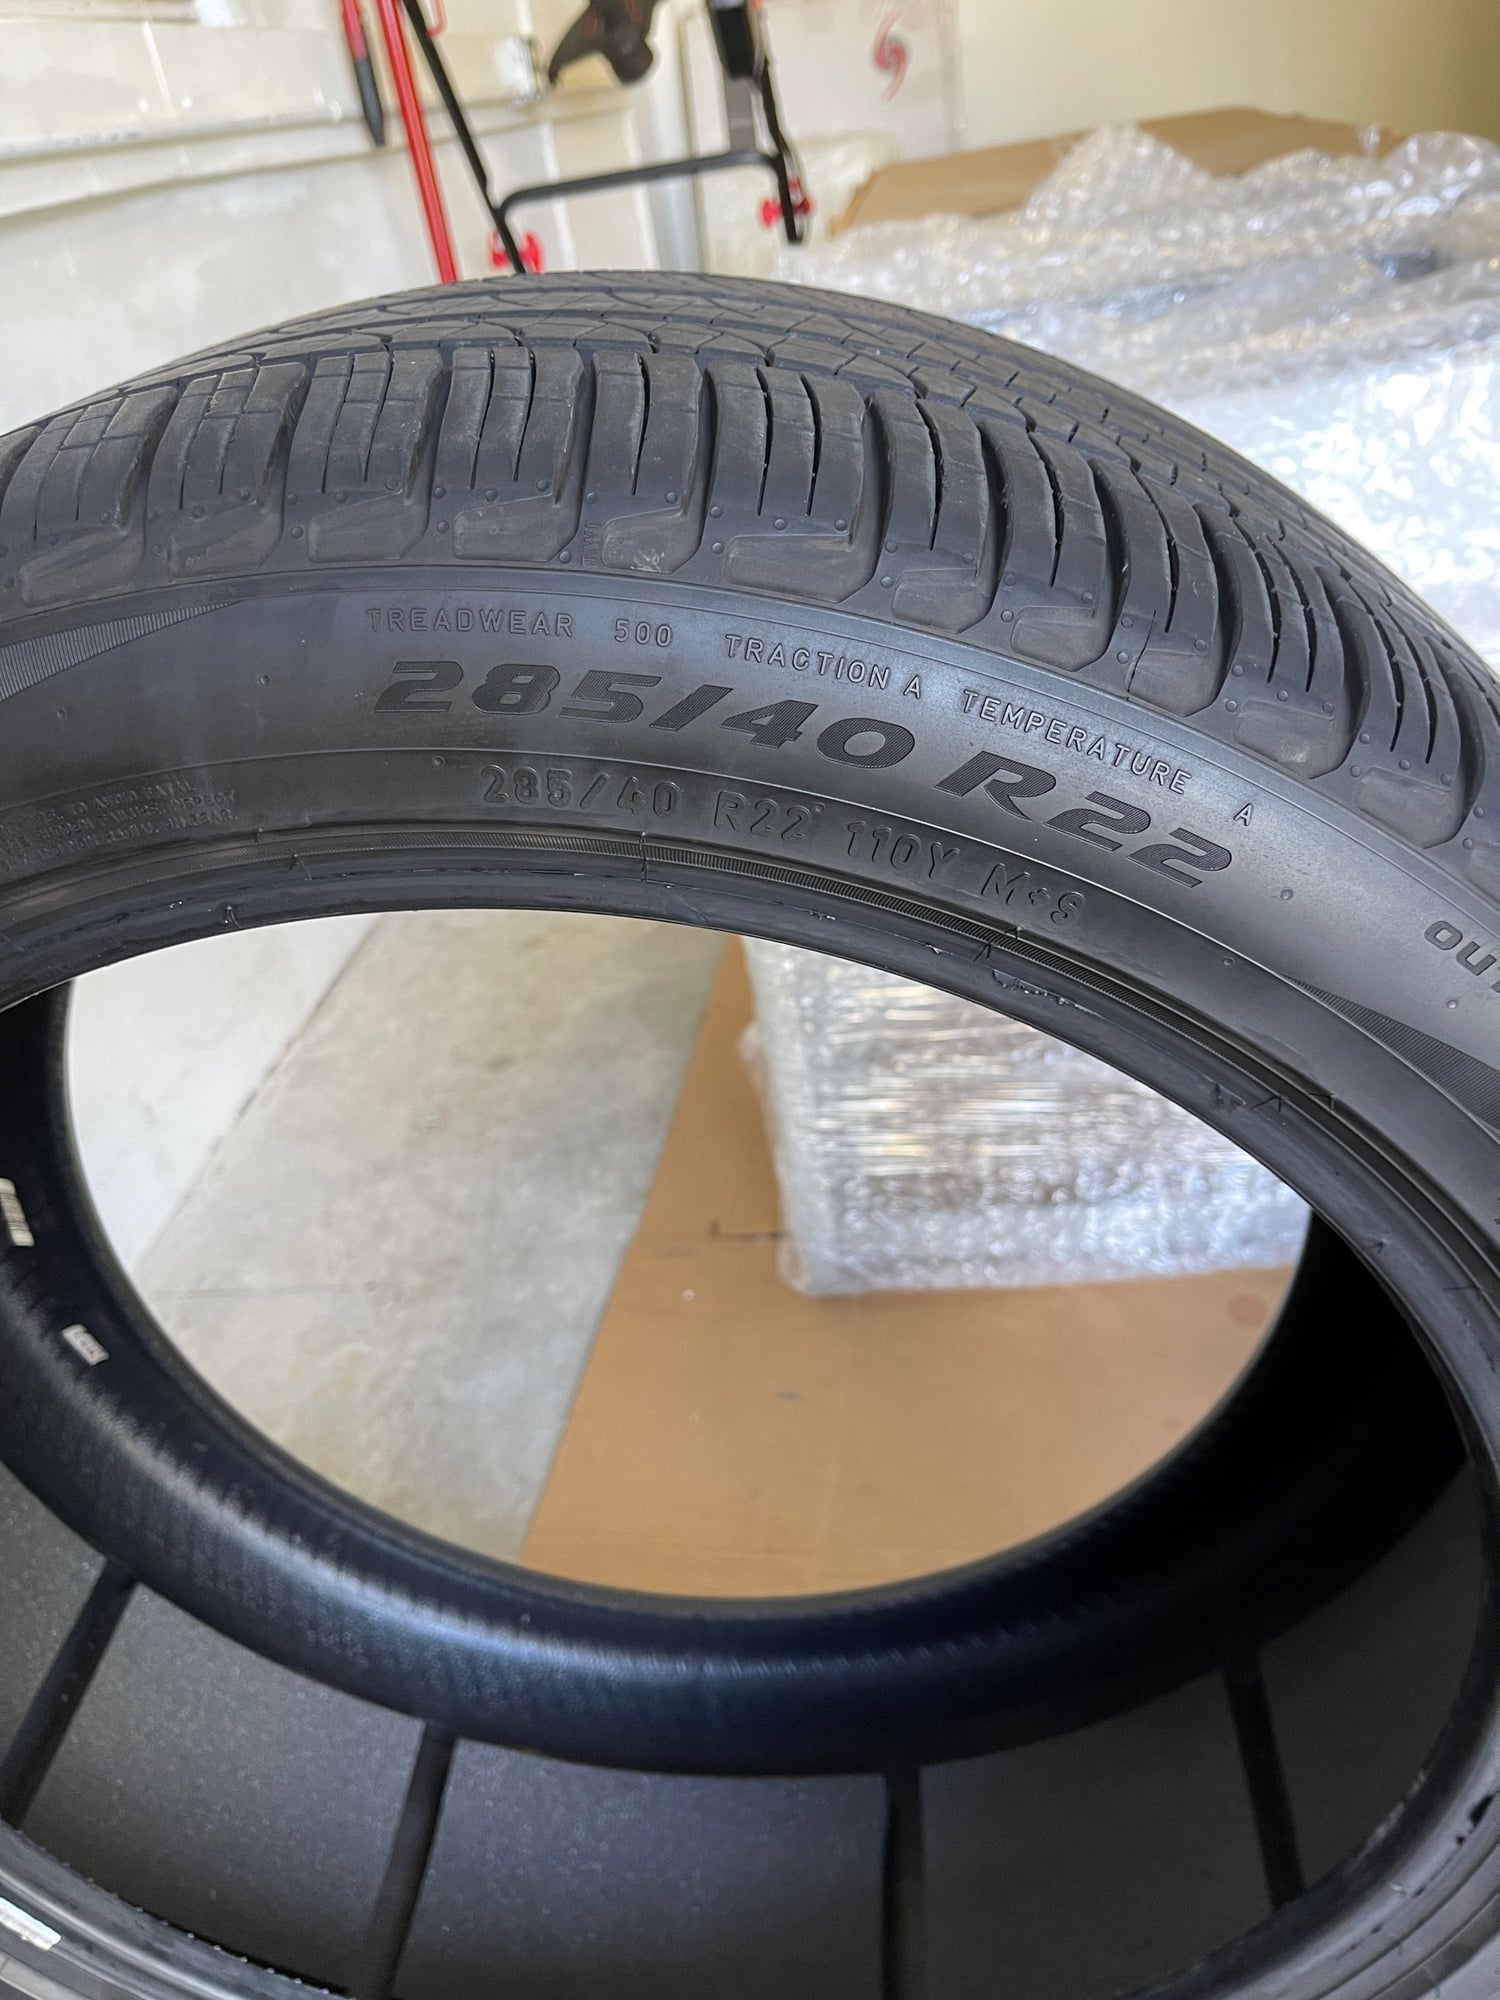 Wheels and Tires/Axles - Pirelli Scopion Zero All Season 285/40 R22 - New - 0  All Models - Delray Beach, FL 33445, United States